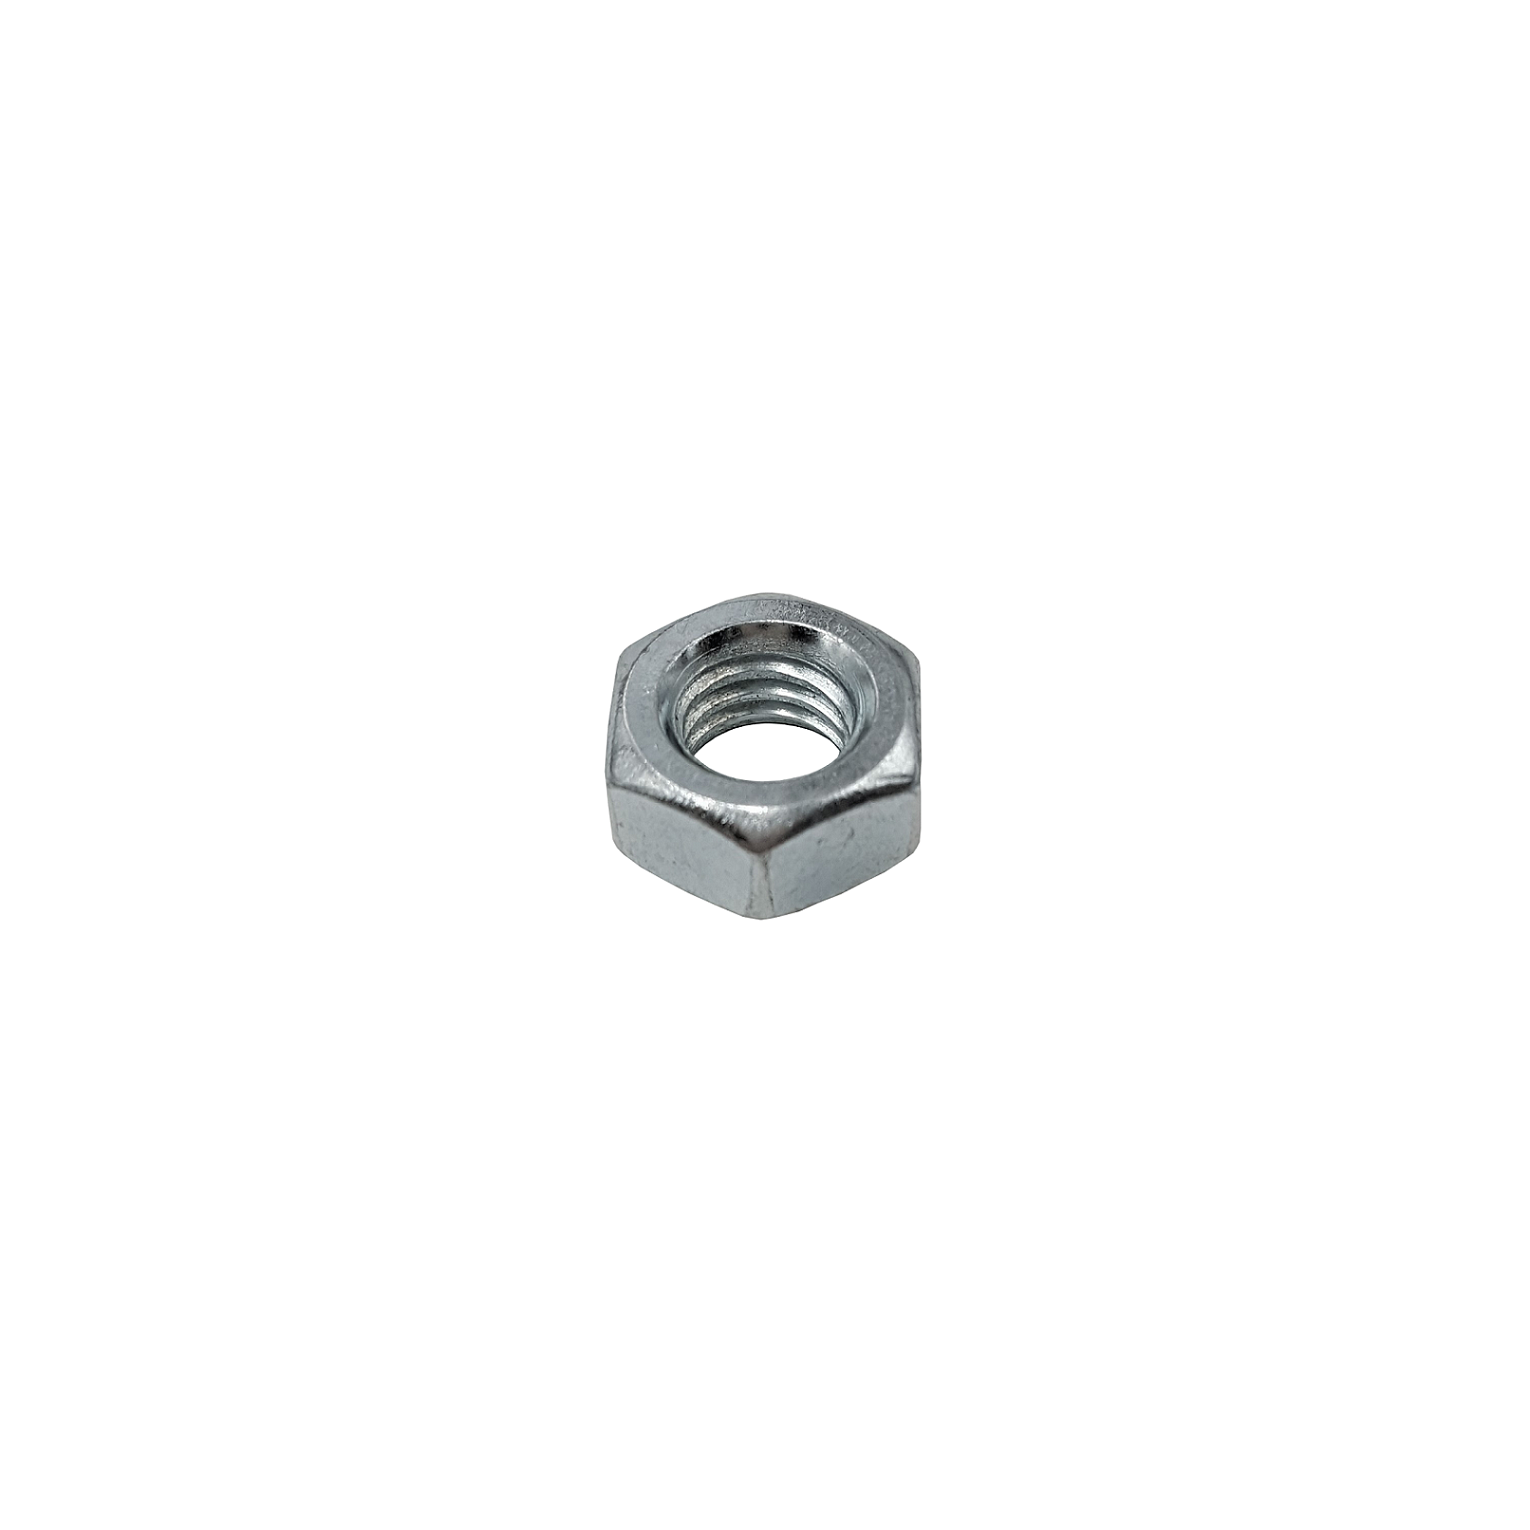 HUSKY 09-GIN38 (⅜" Galvanised Iron Hexagonal Nut (10 pieces))